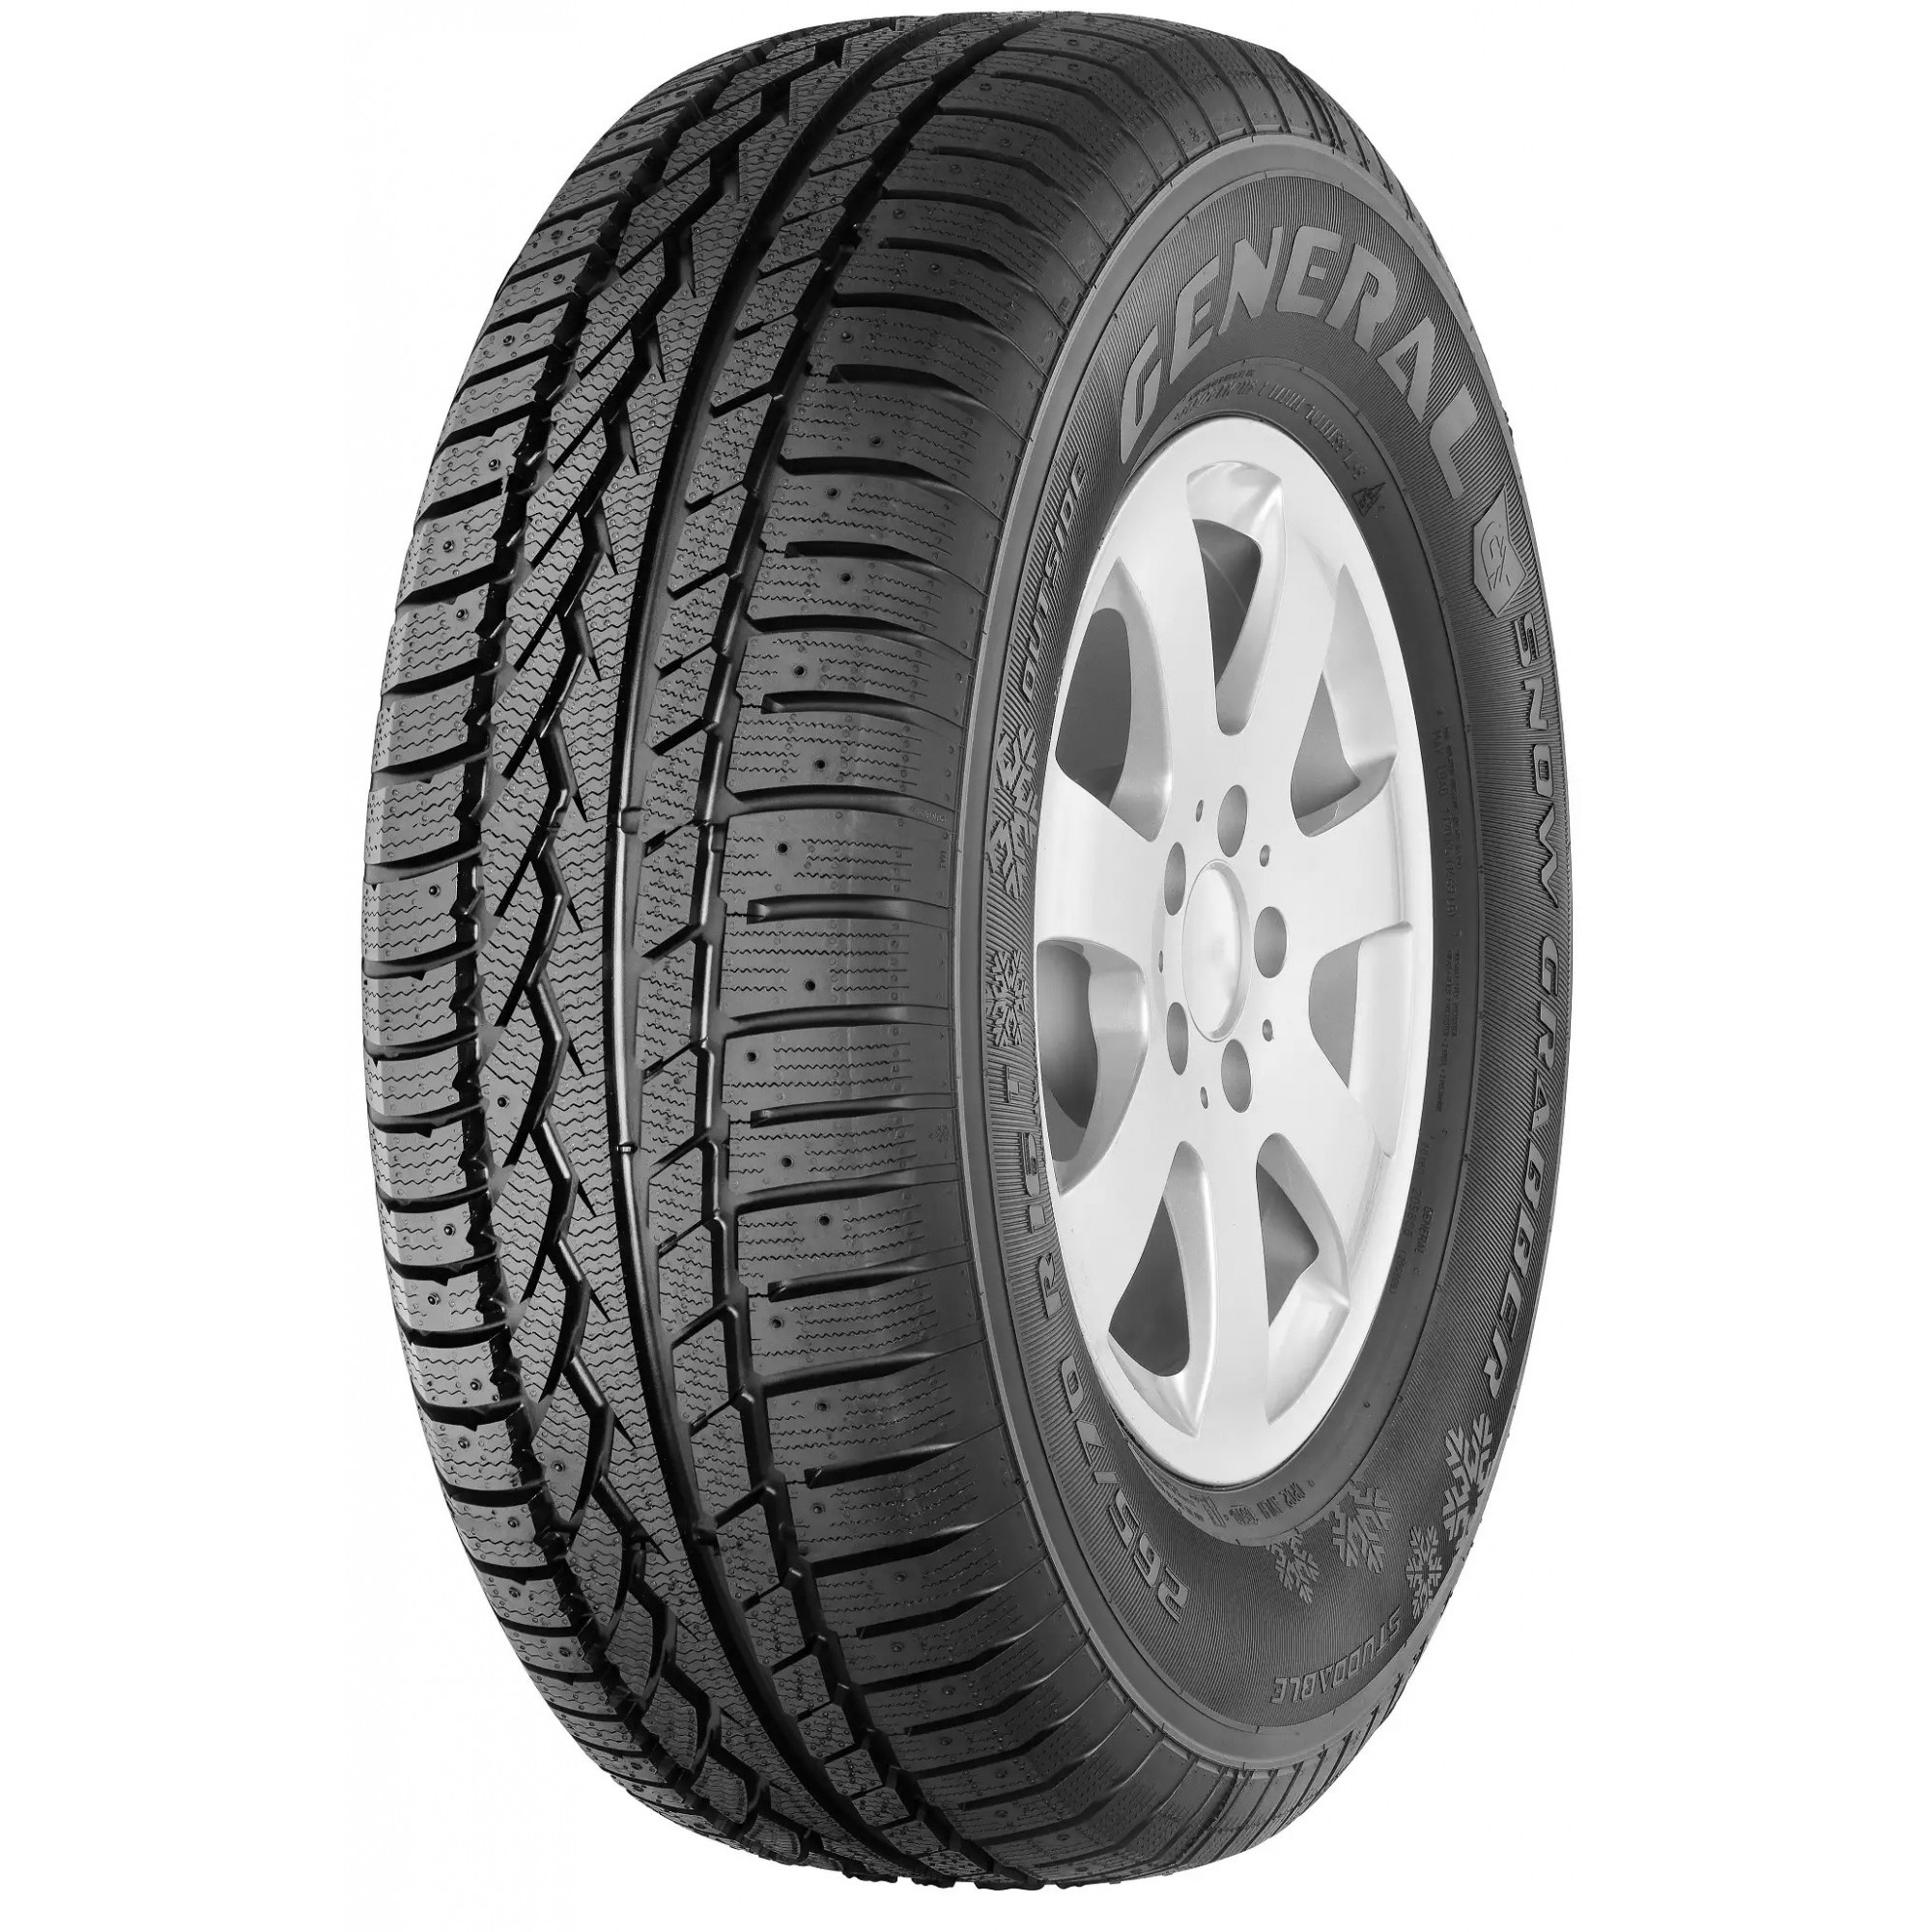 General Tire Grabber (205/70R15 96T) - зображення 1